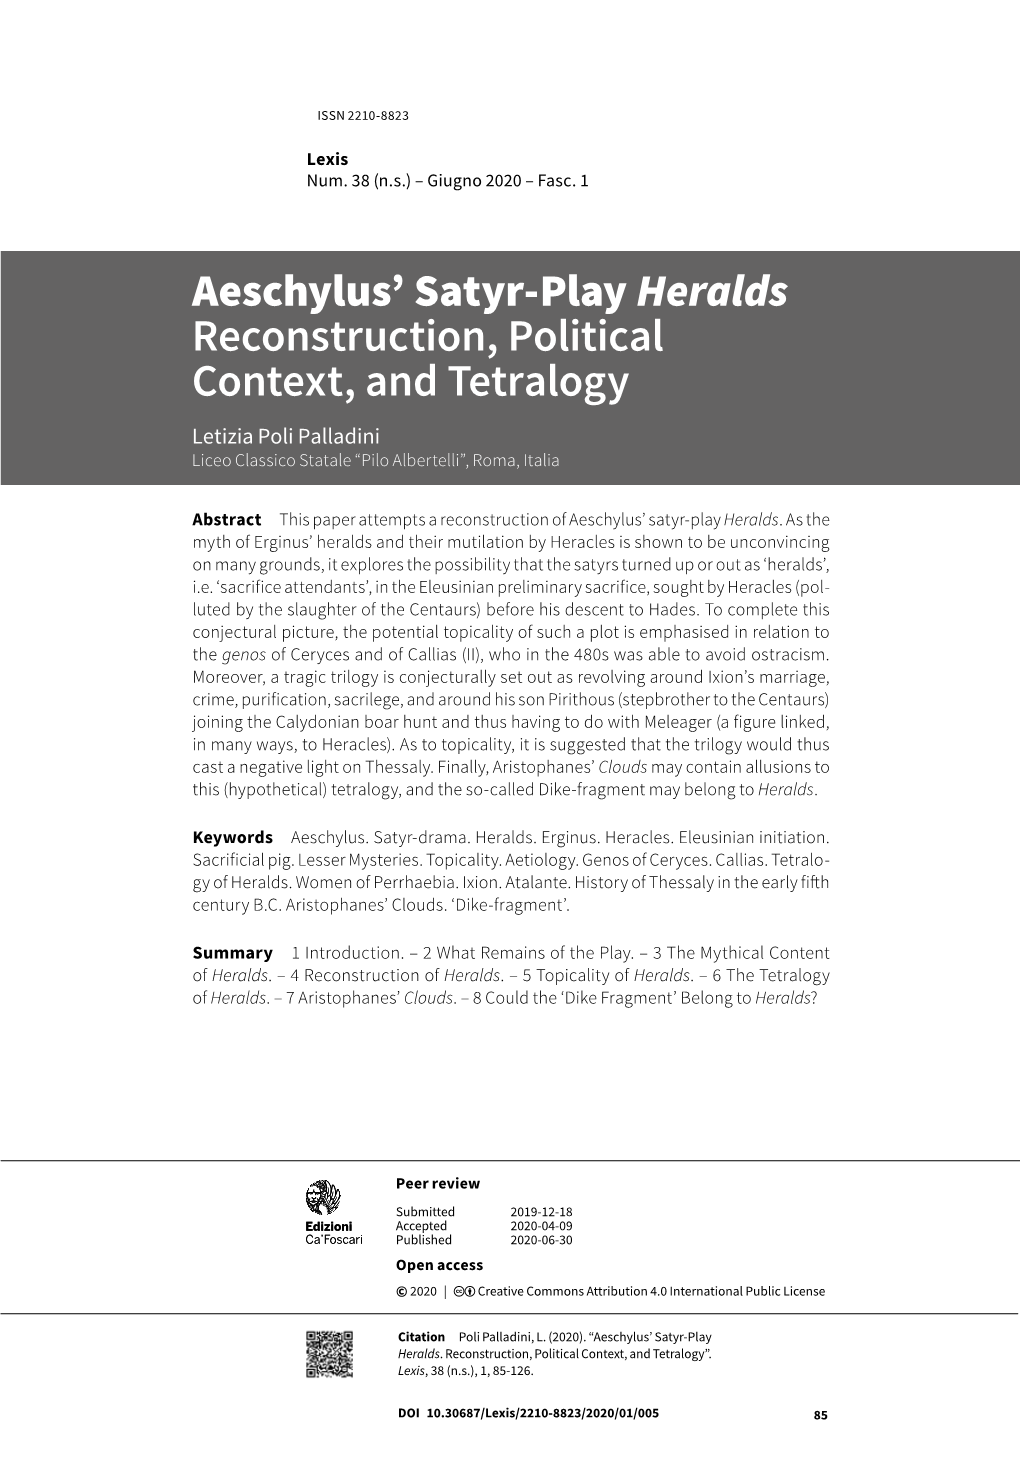 Aeschylus' Satyr-Play Heralds Reconstruction, Political Context